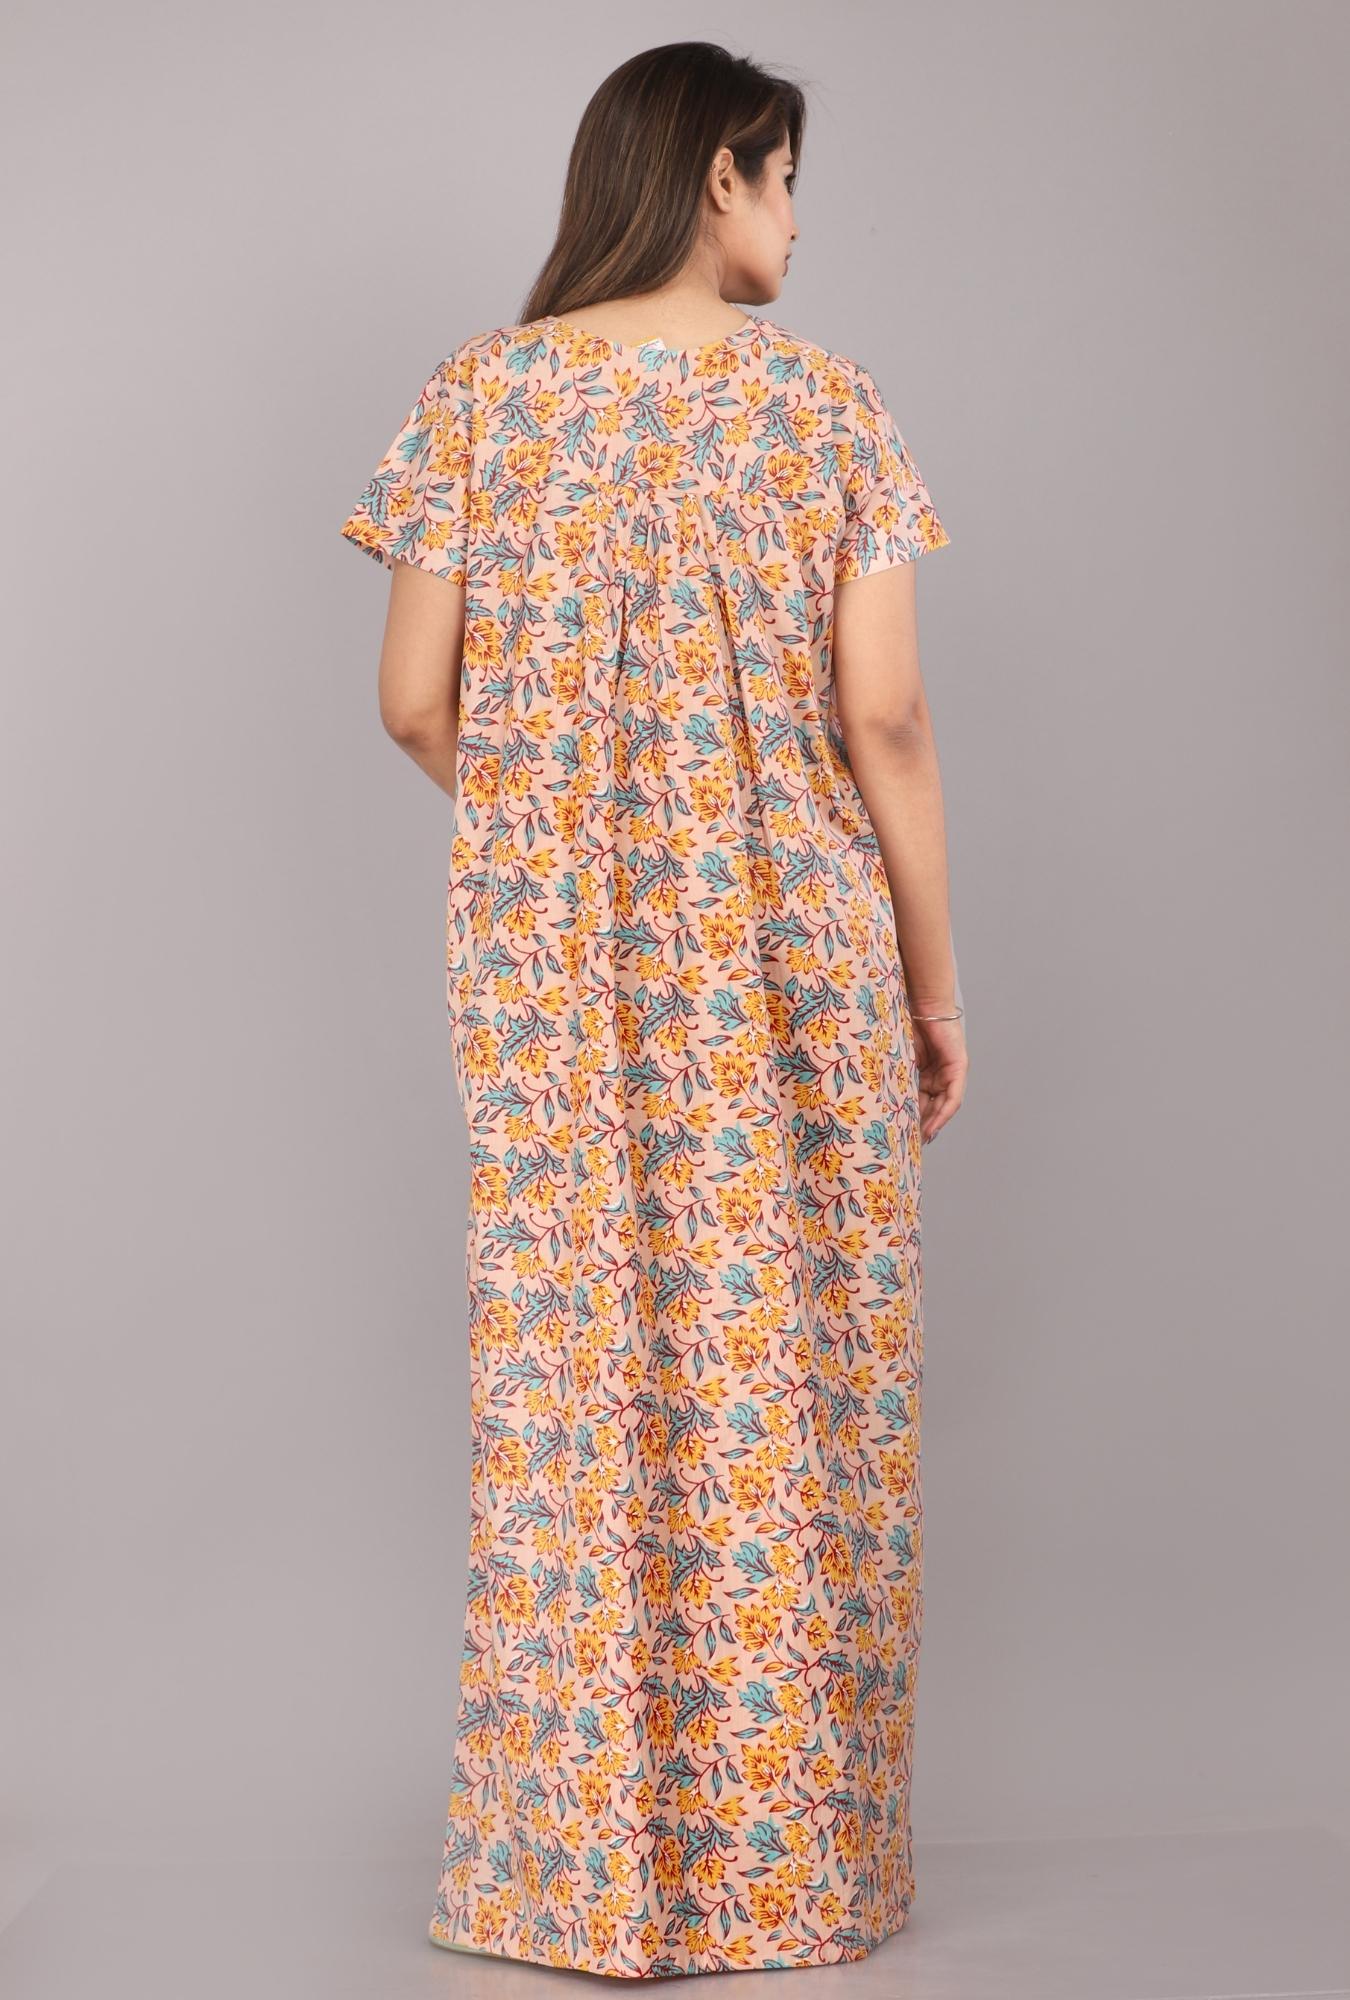 Iris Misty Rose Cotton Printed Nightwear Gowns